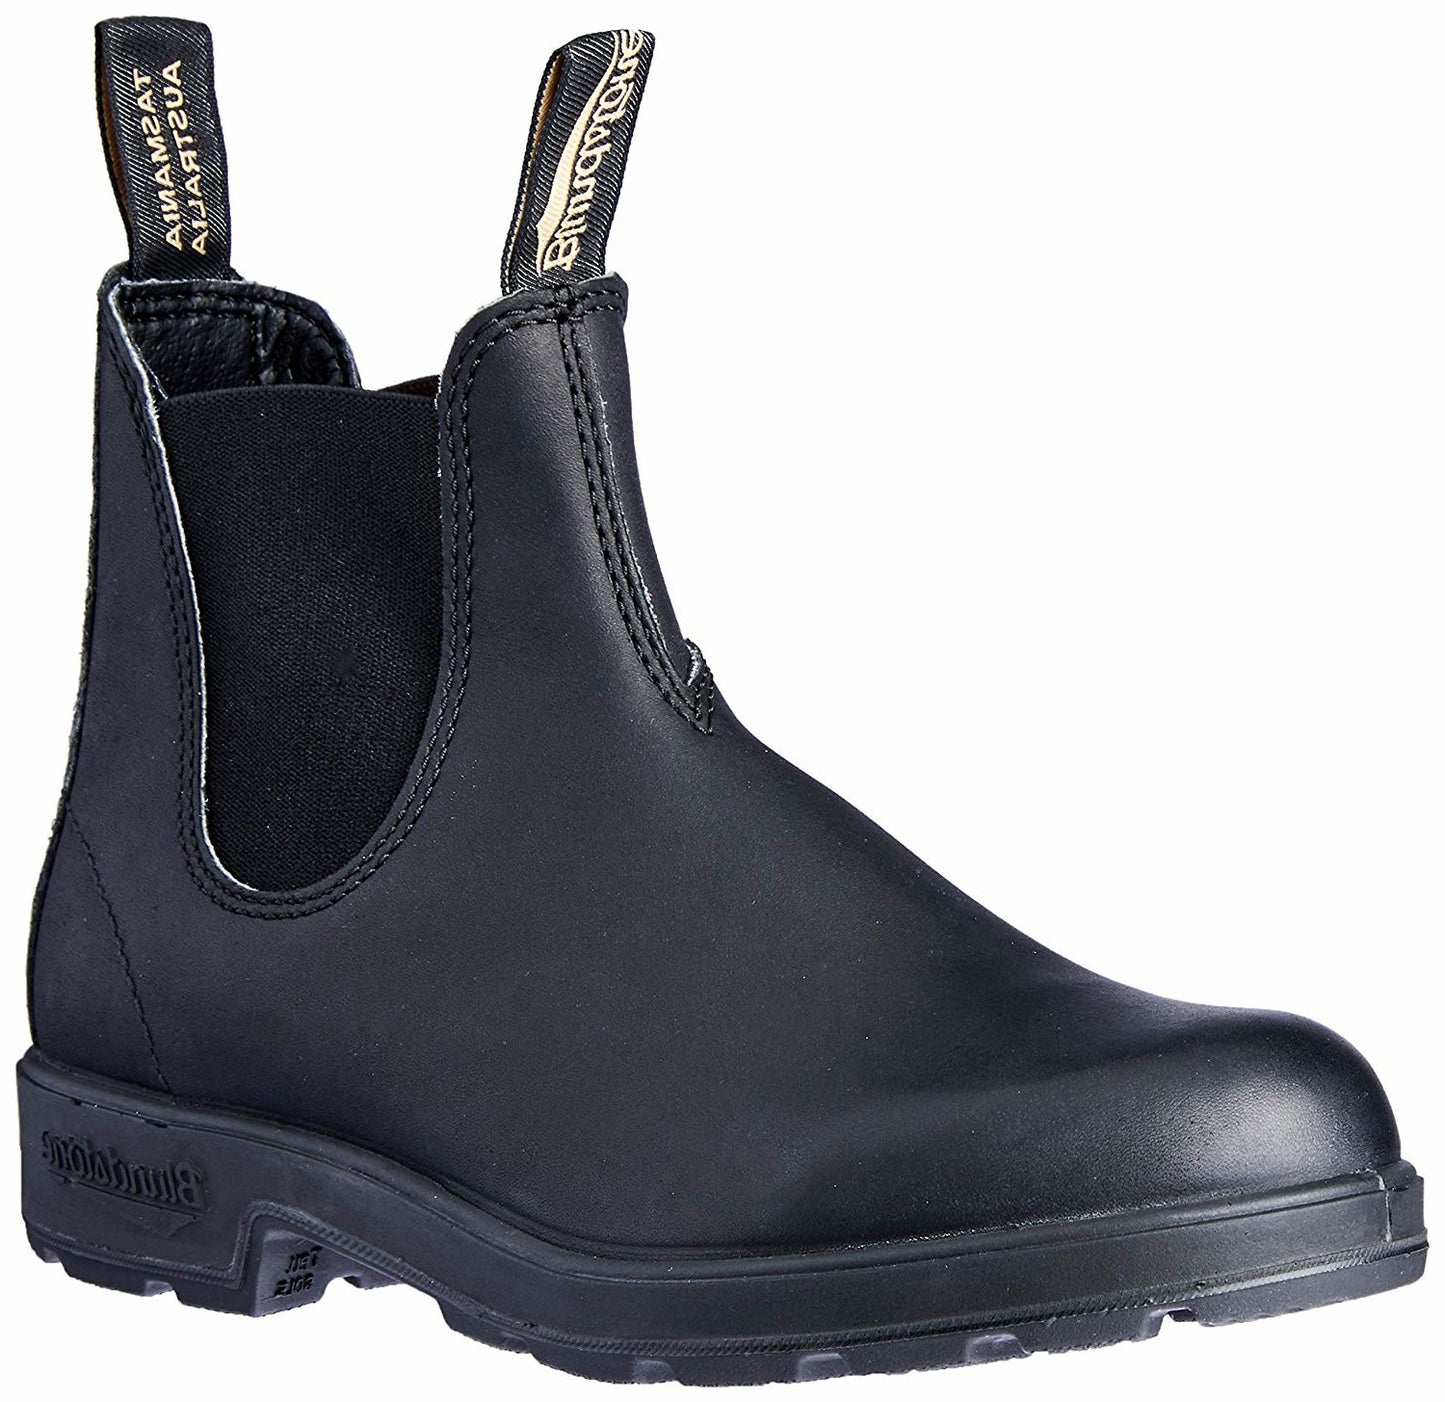 Blundstone 510 Boots - Black